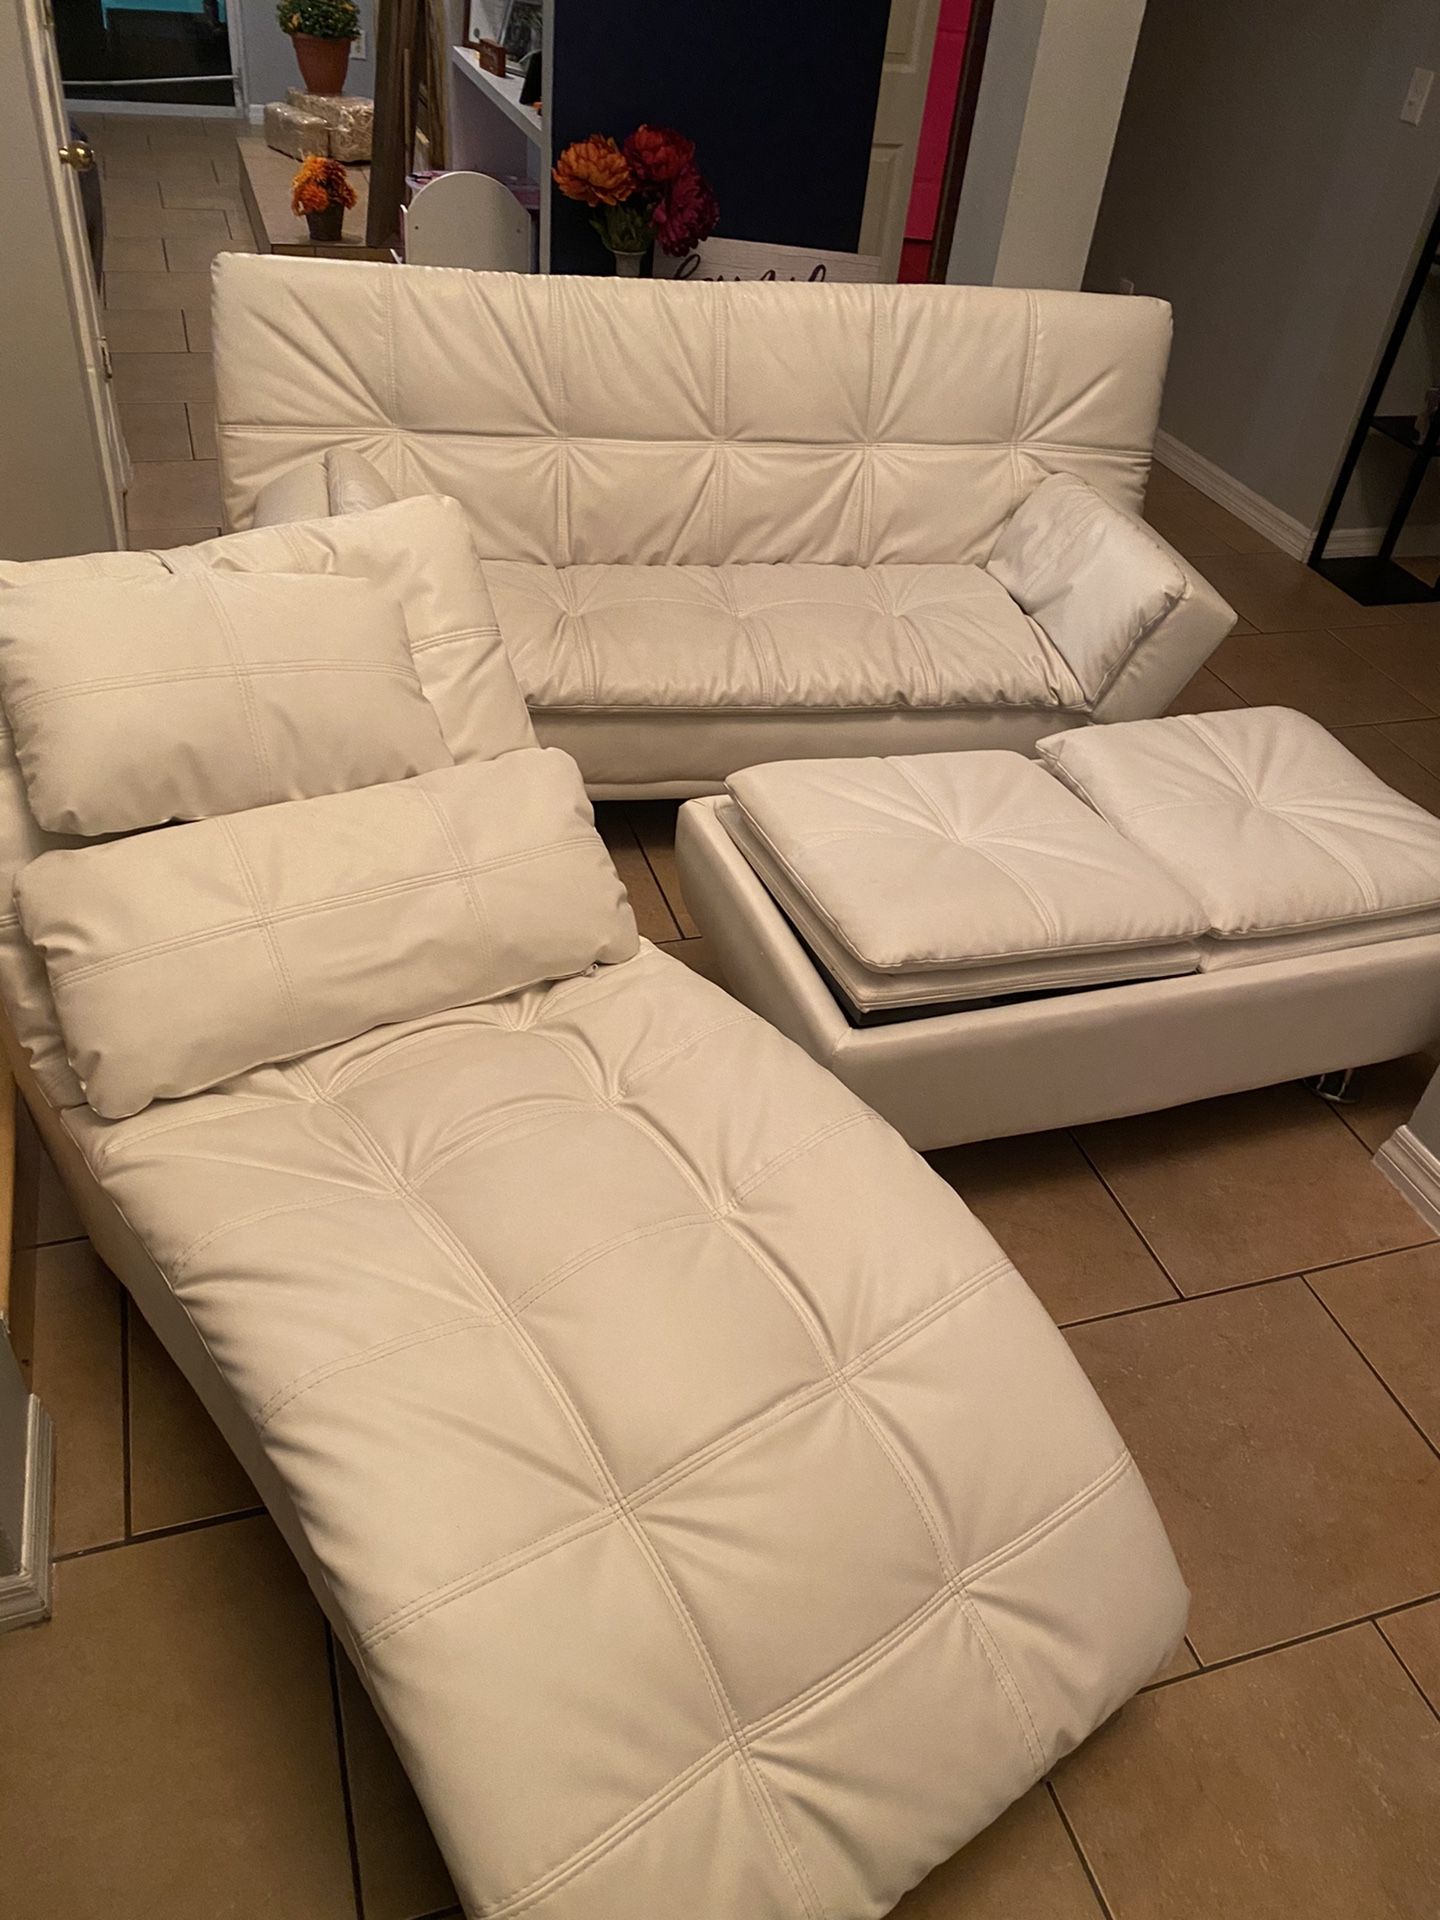 White leather futon couch set